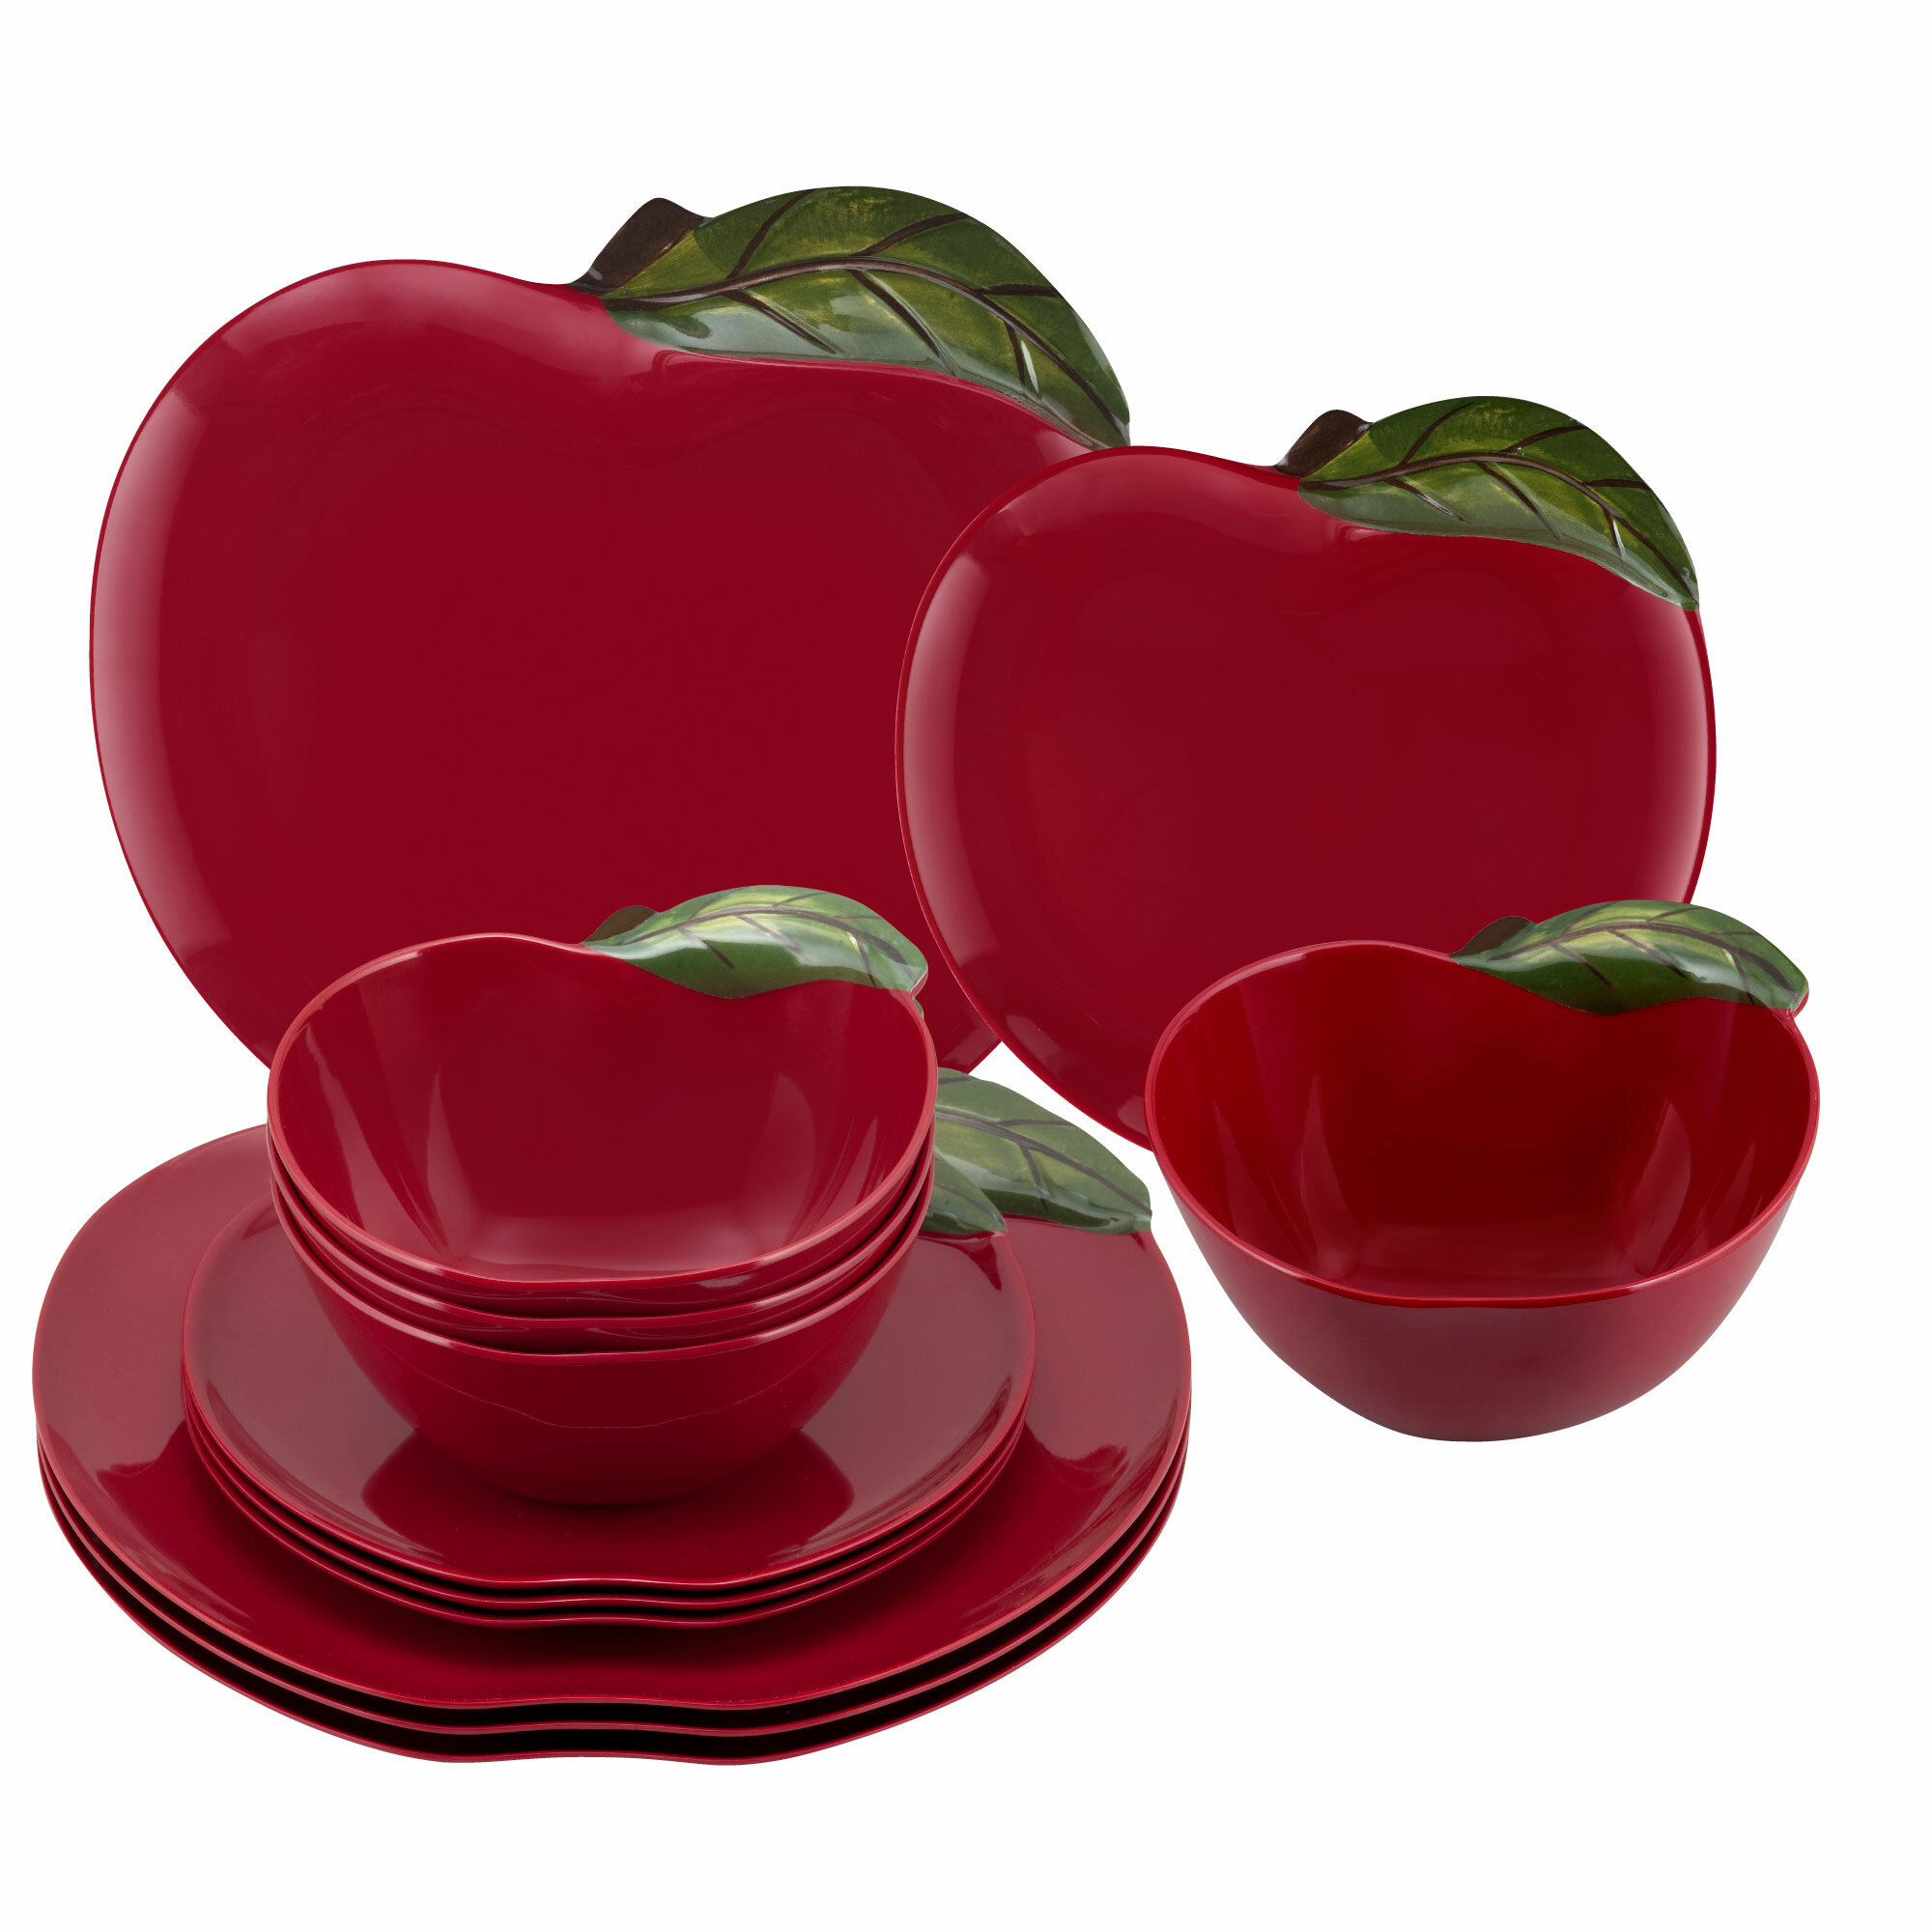 Apple dishes. Яблоки меламиновые. Set Dishwash Plate. Piece is Apple.